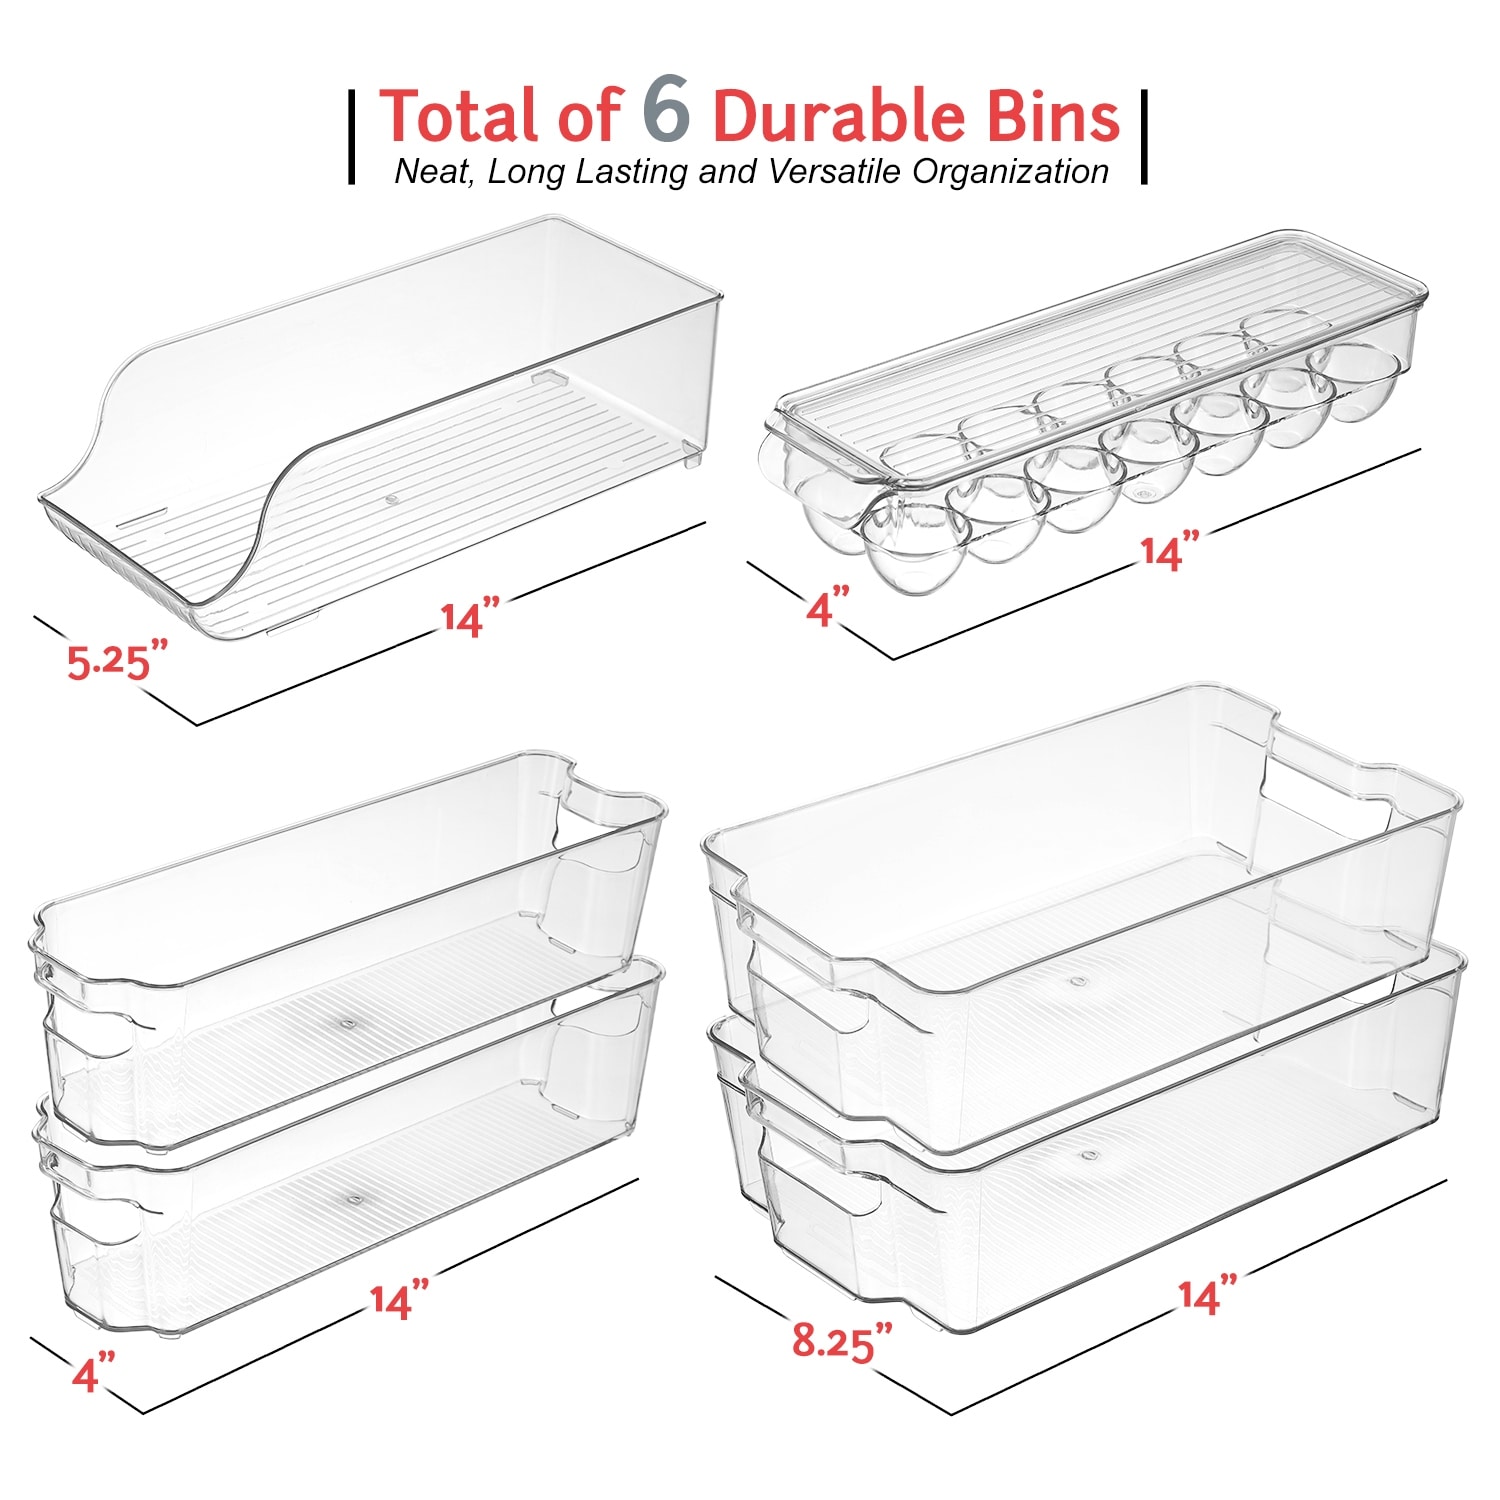 Organization boxes for the fridge - 6 pcs